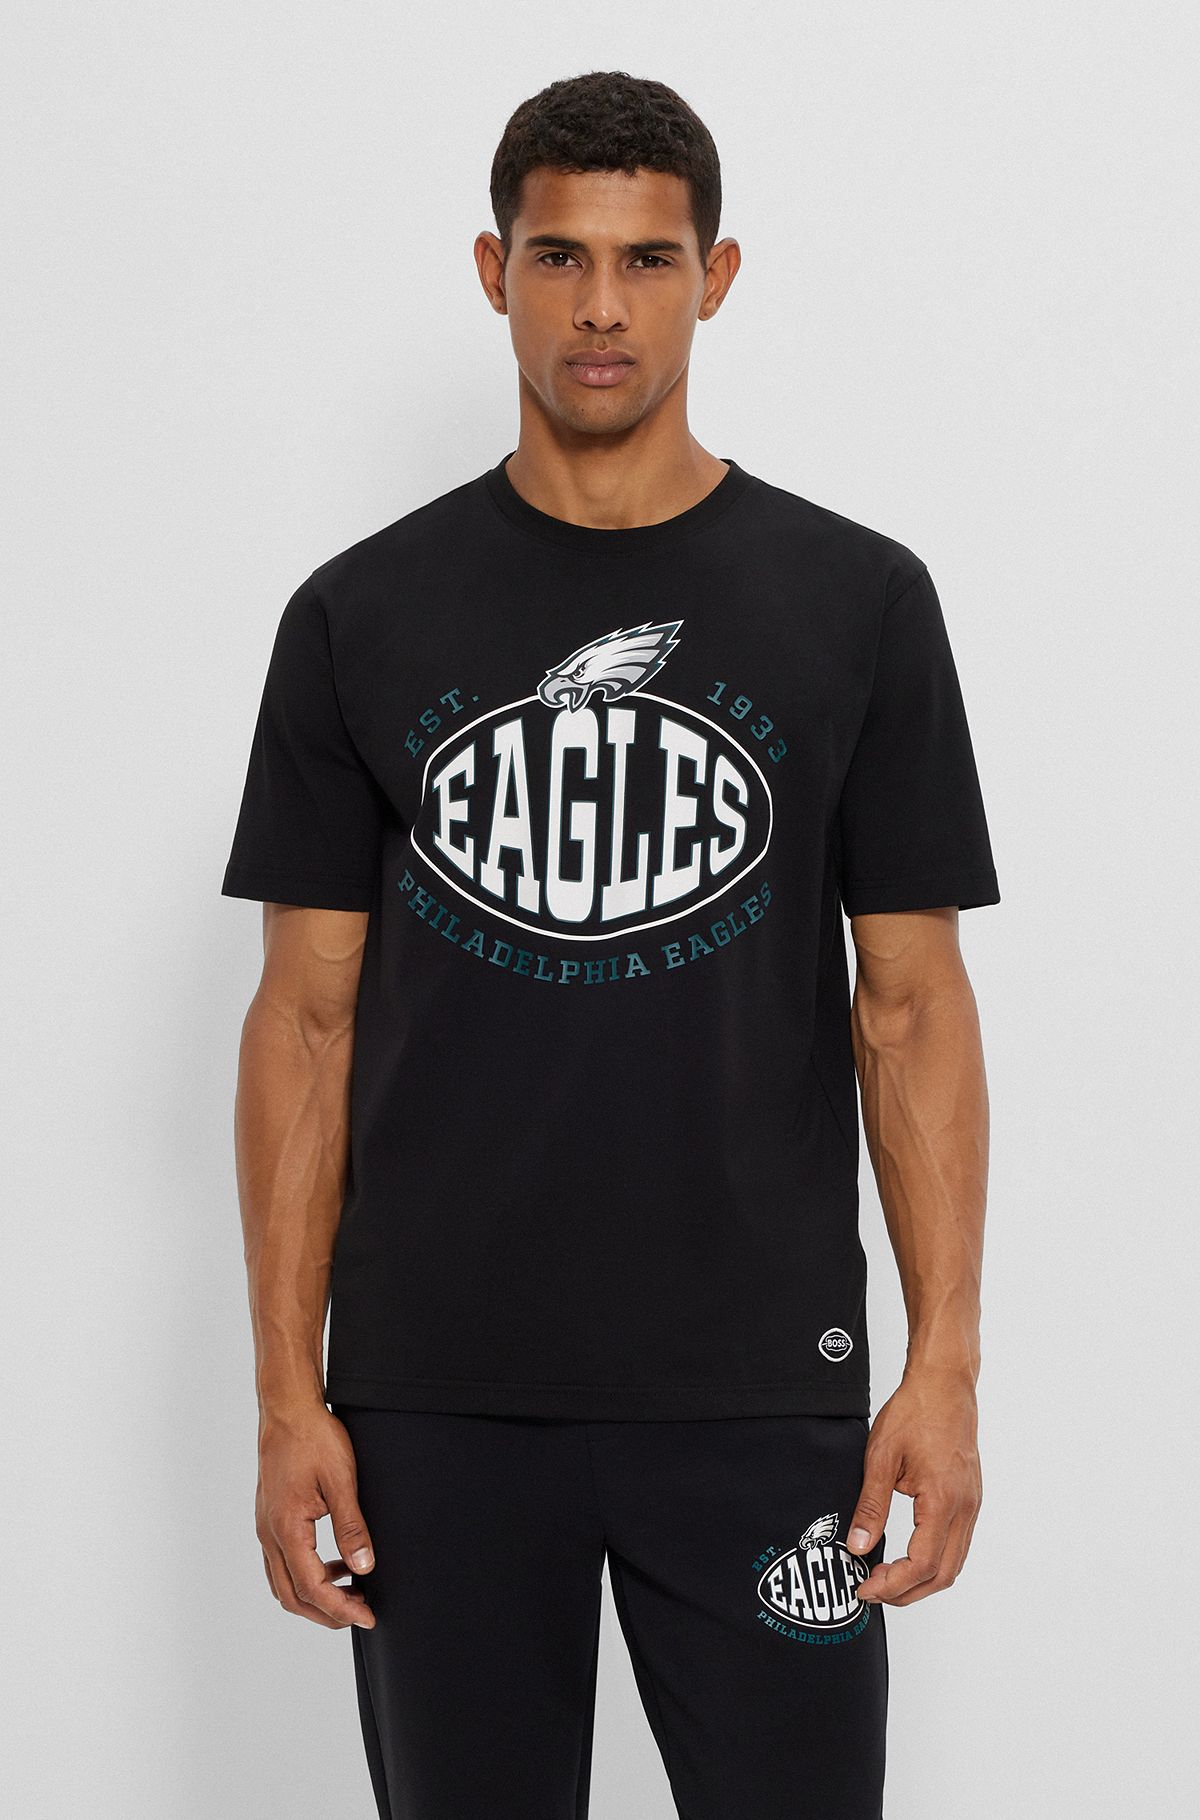  T-shirt en coton stretch BOSS x NFL avec logo du partenariat, Eagles